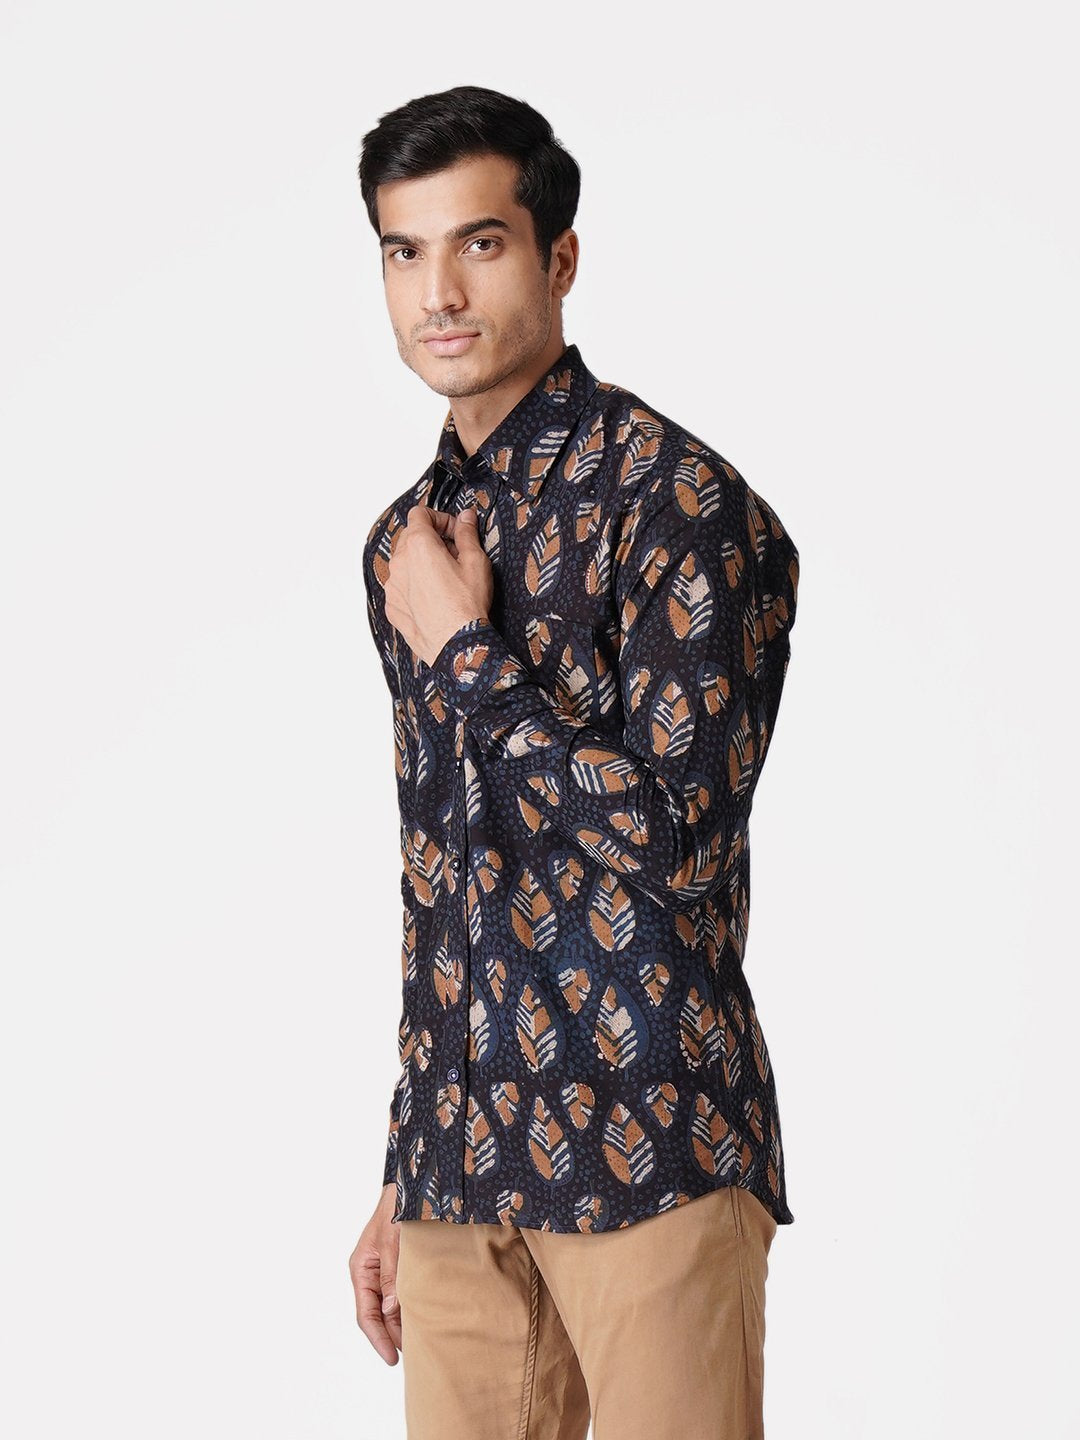 WINTAGE Men's Jaipur Cotton Tropical Hawaiian Batik Casual Shirt: Black